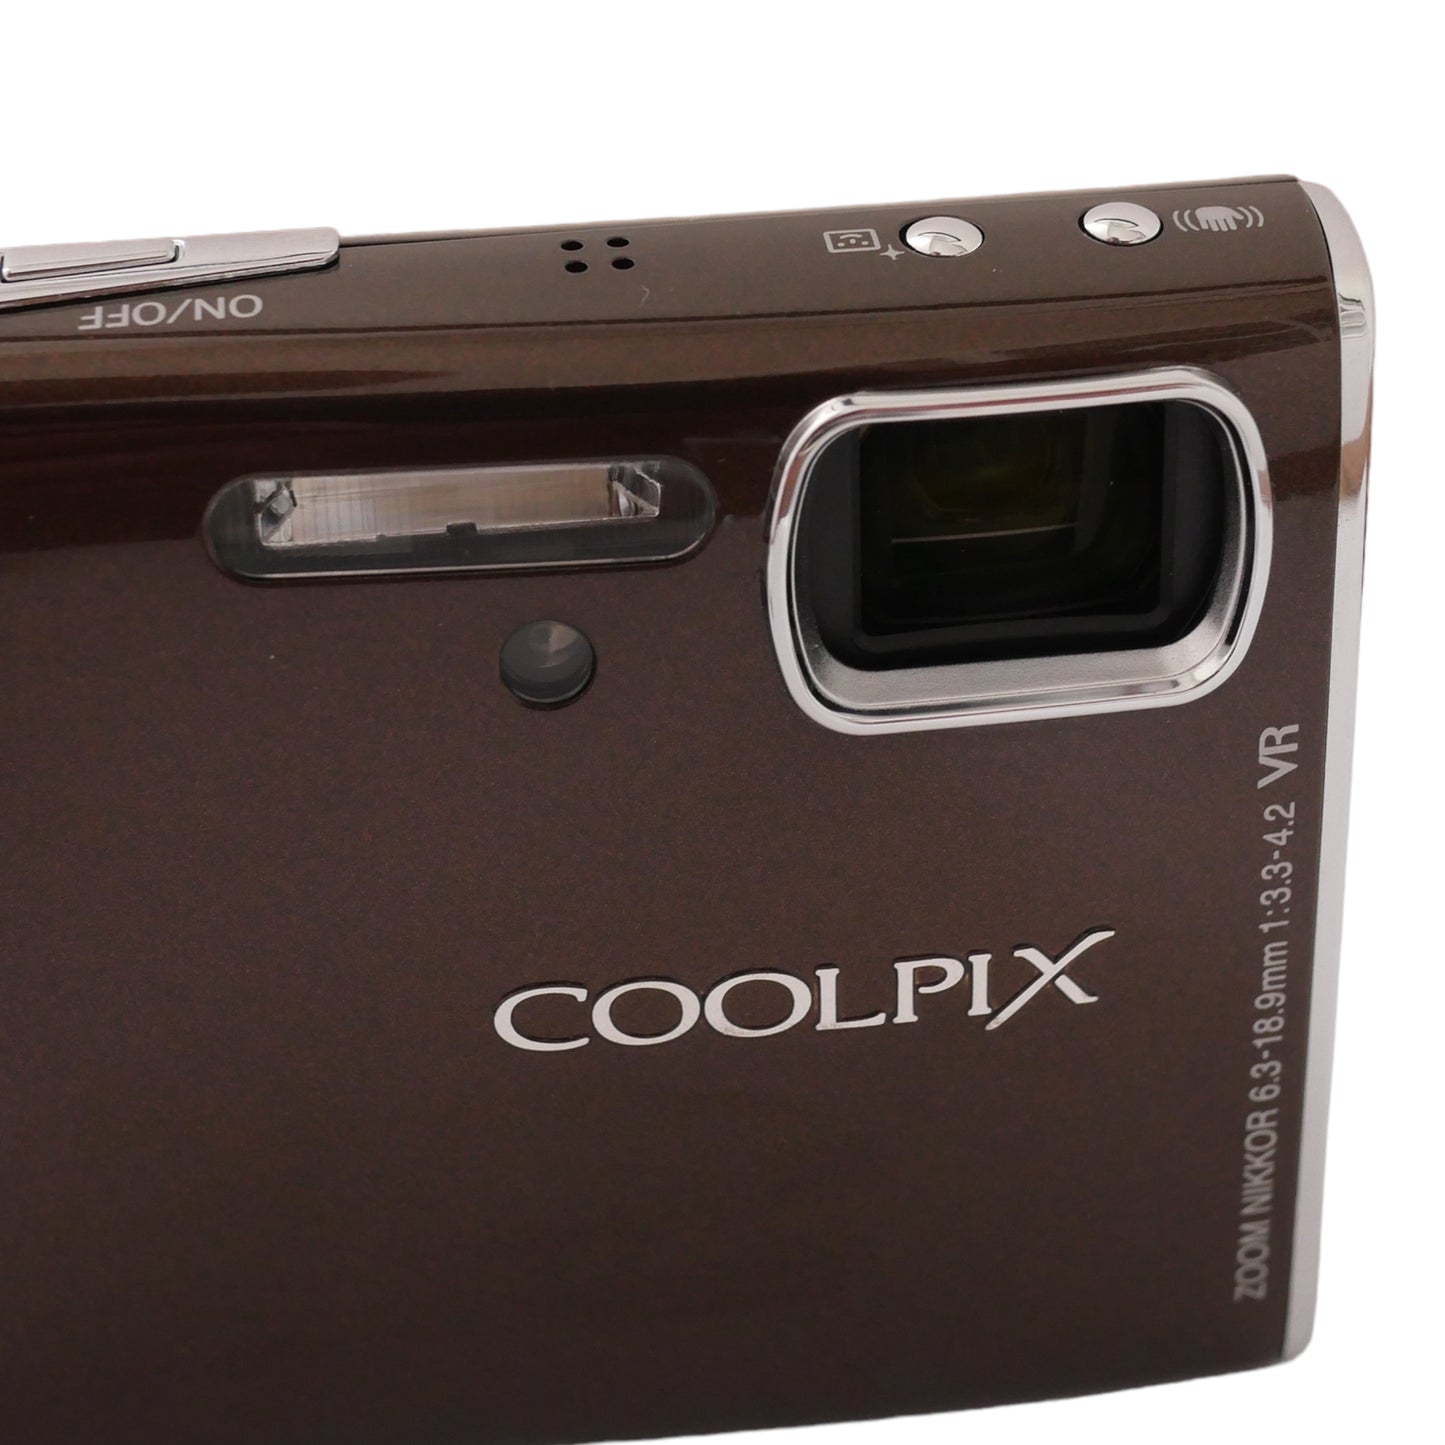 Nikon Coolpix S50 7.2 Megapixel Digital Camera - Brown